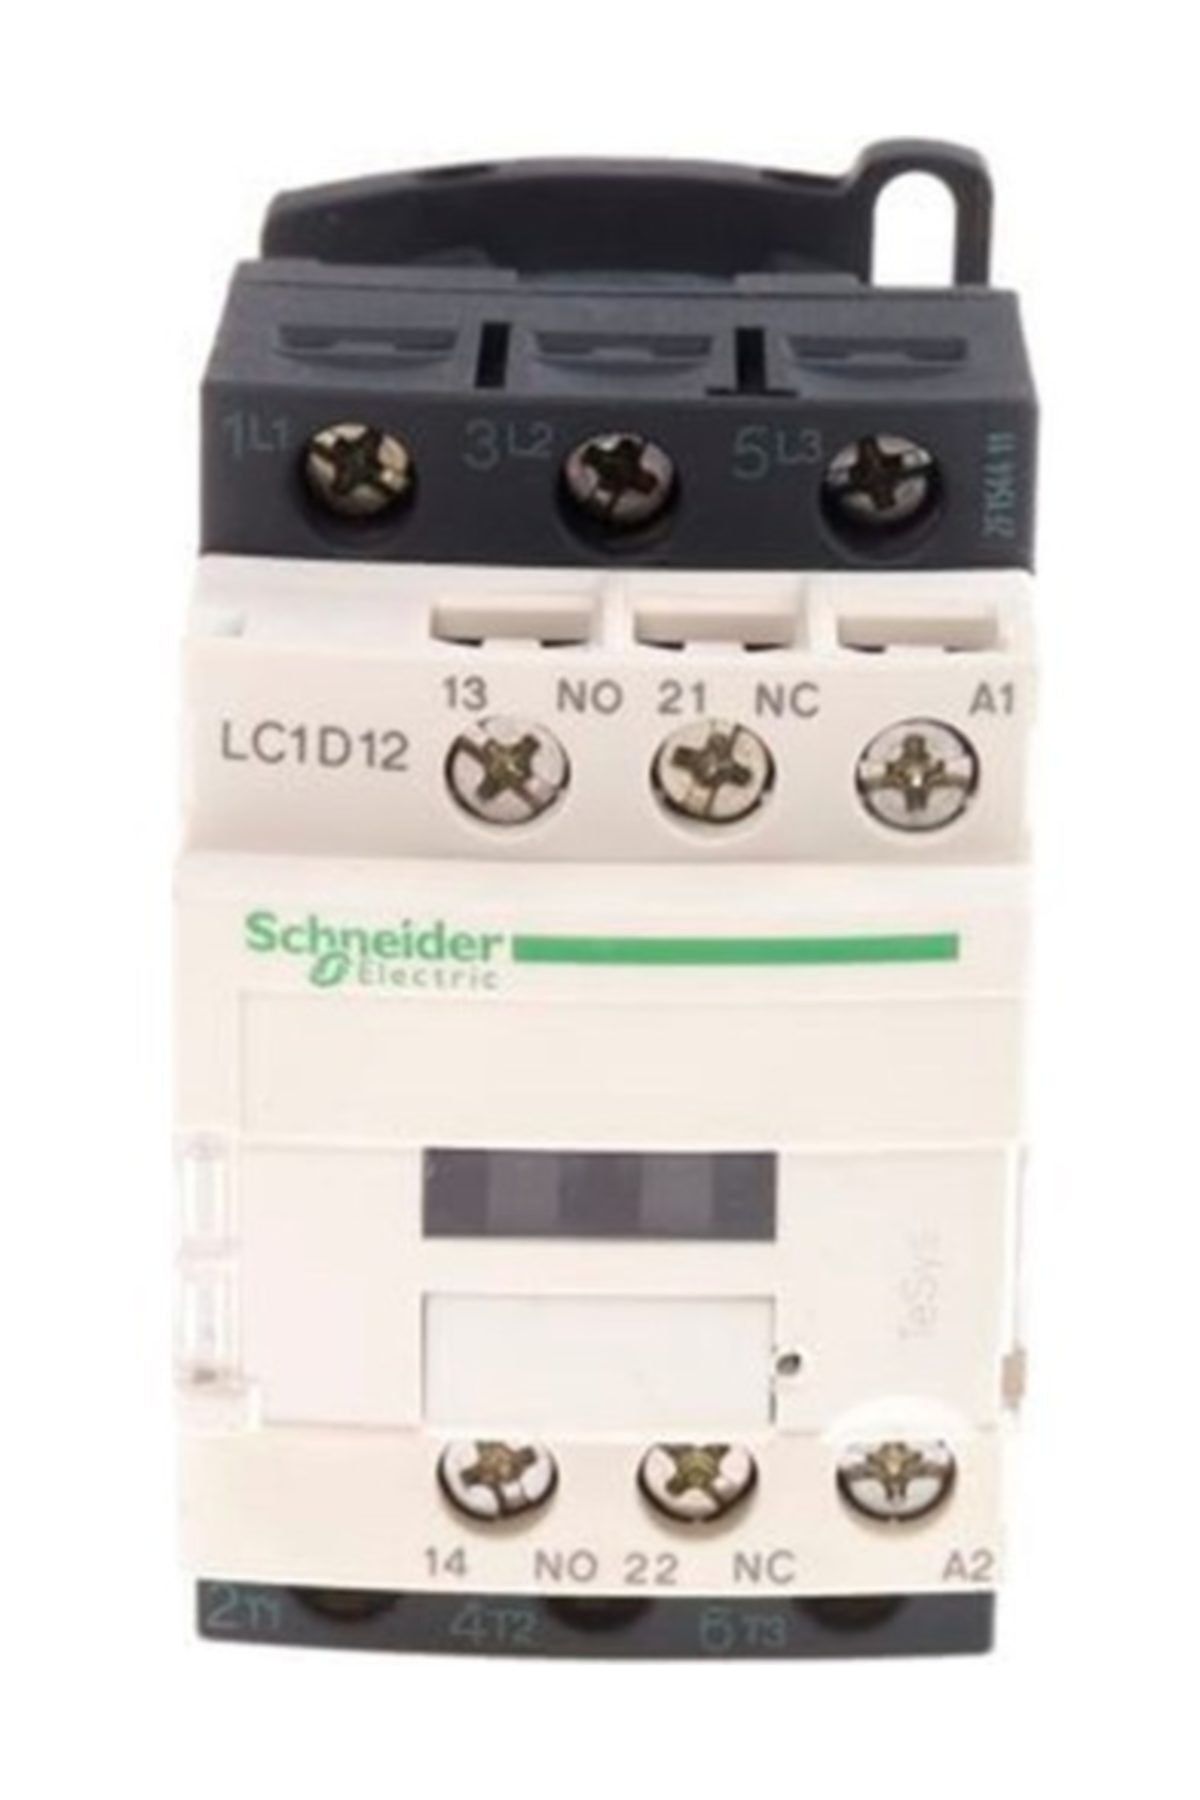 Schneider Lc1d12m7 - D Serisi 5,5kw 12a 220v Ac Kontaktör